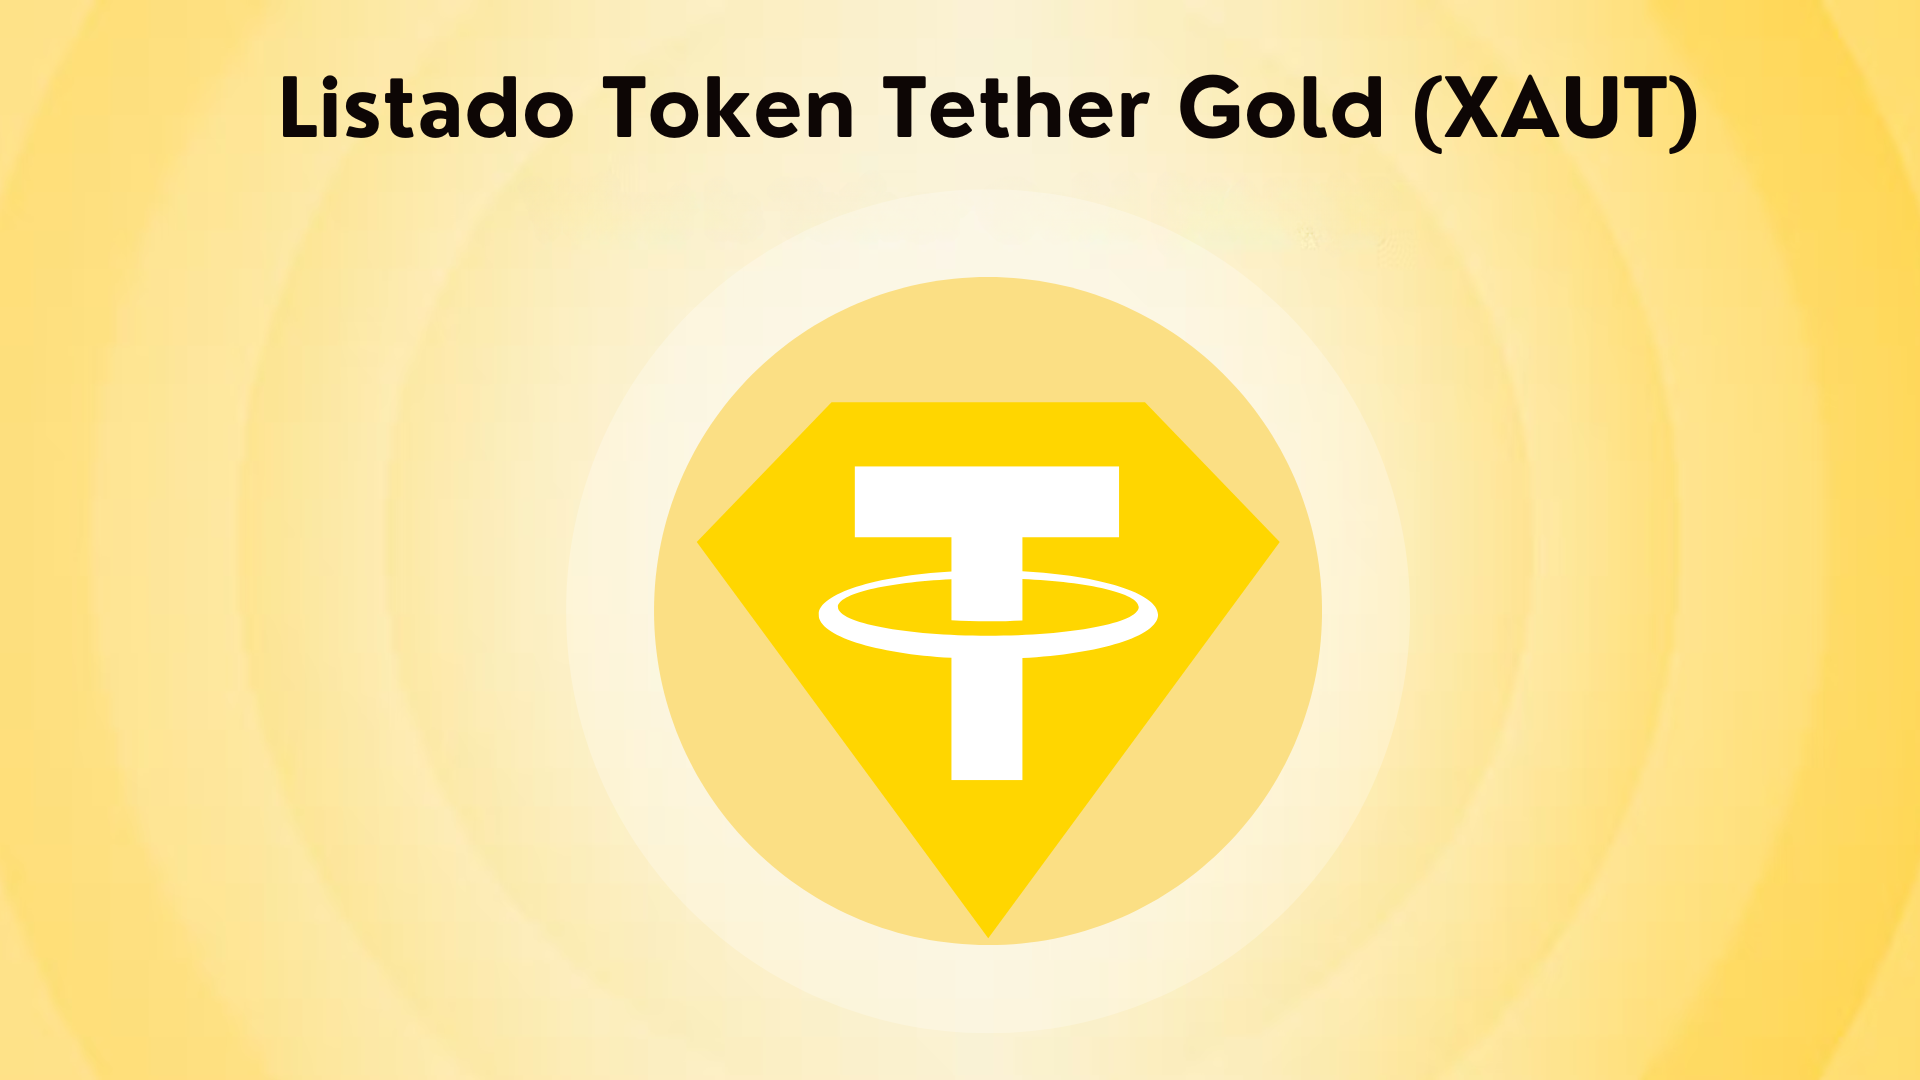 ¡Listado del Token Tether Gold (XAUT)!